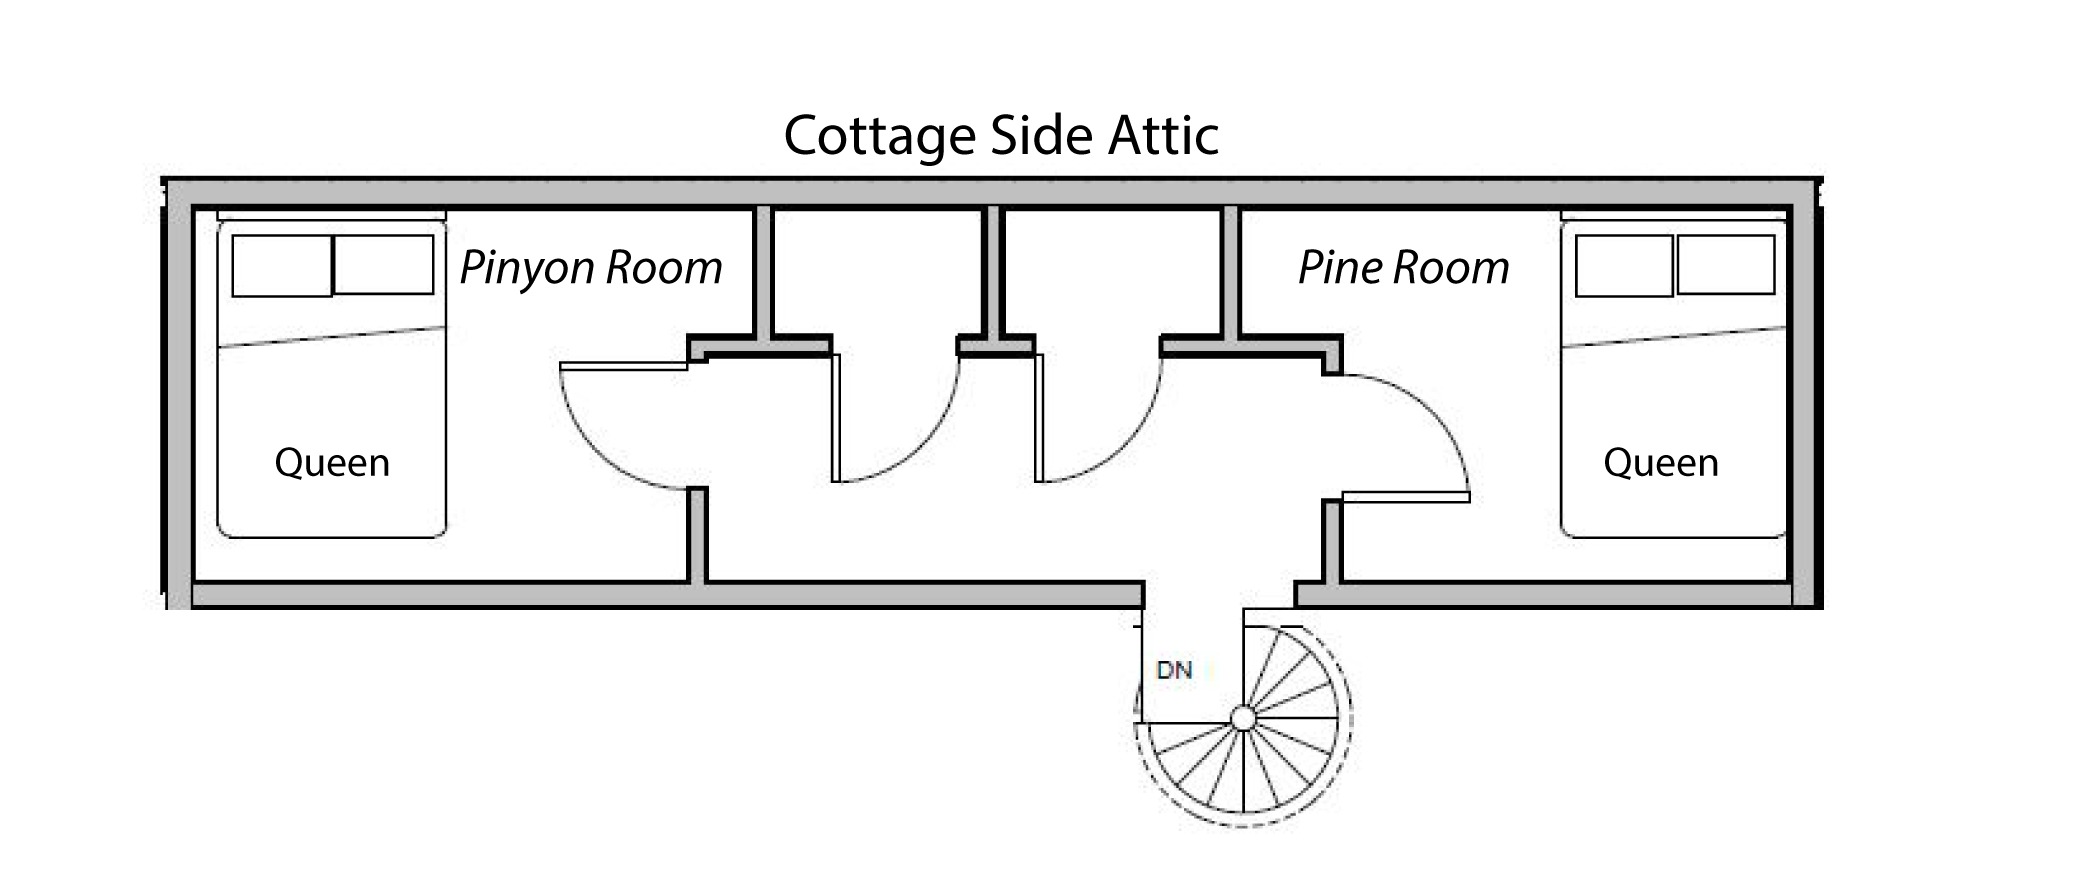 Cottage side attic bedrooms